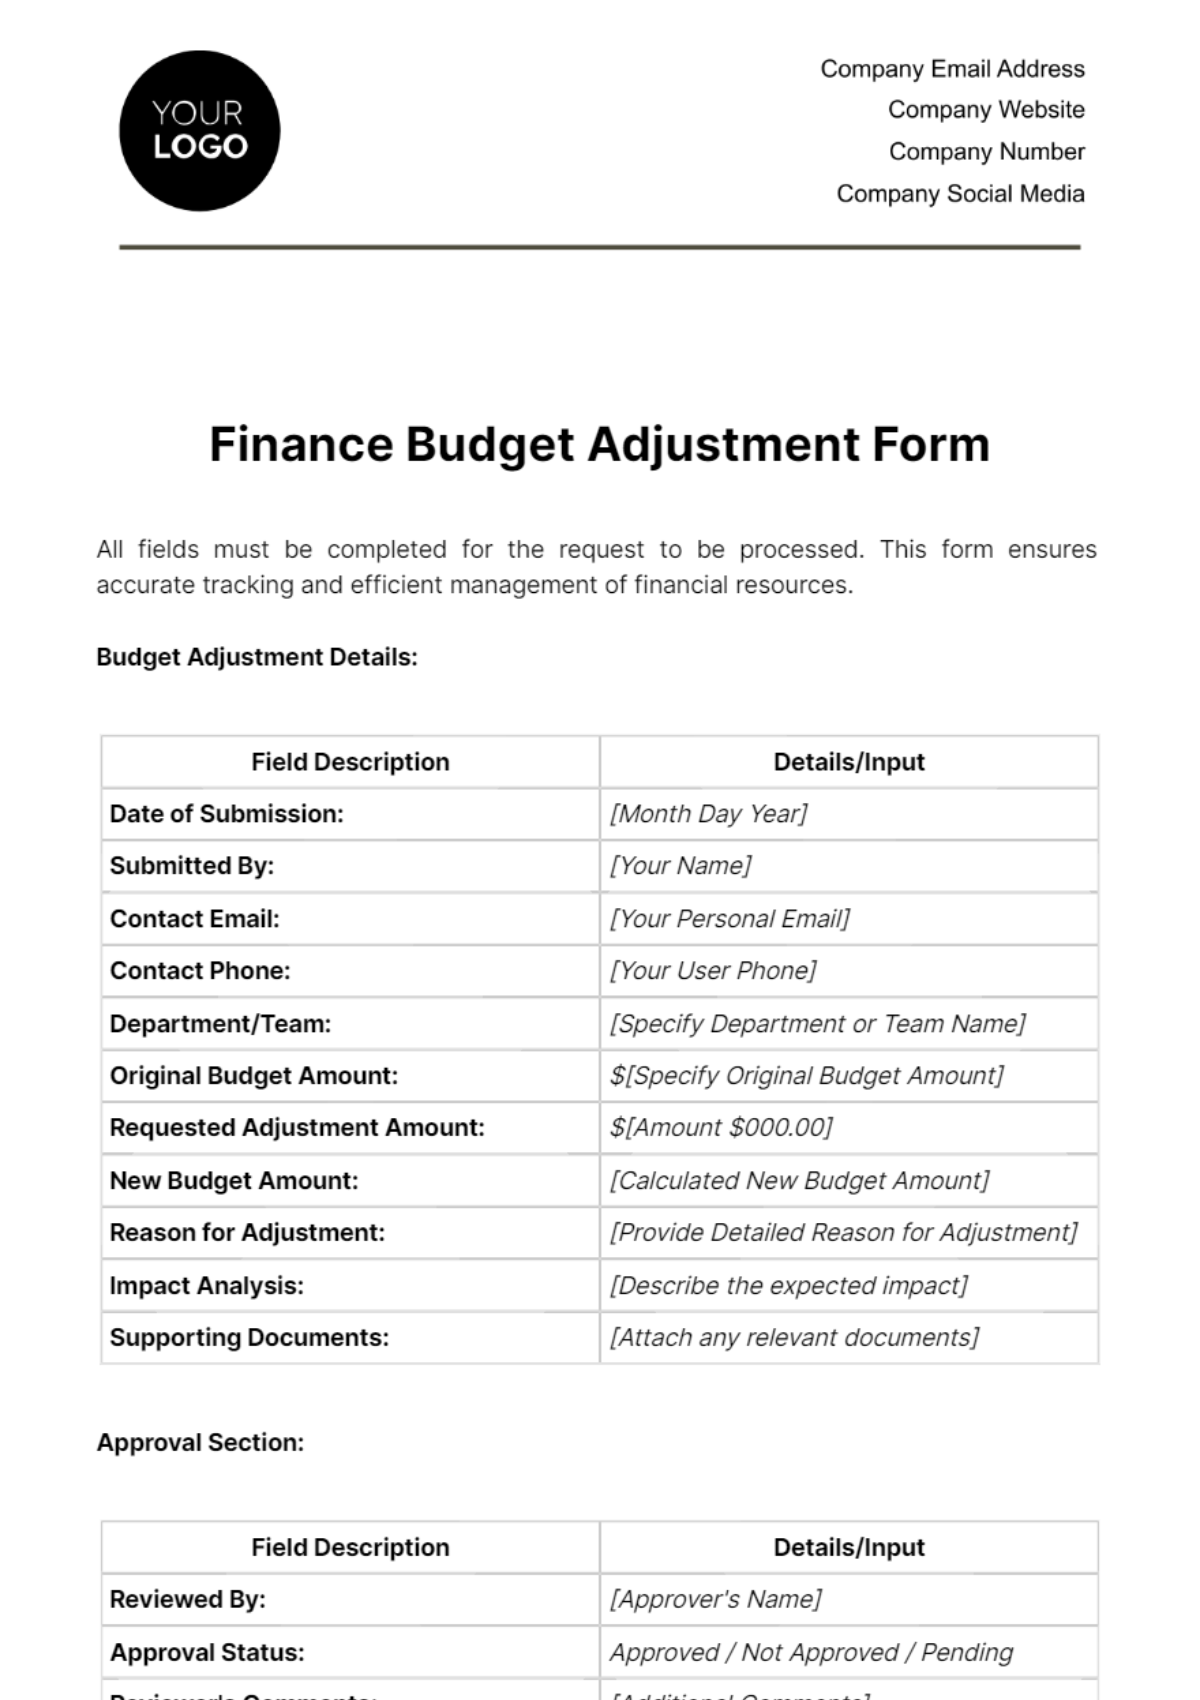 Finance Budget Adjustment Form Template